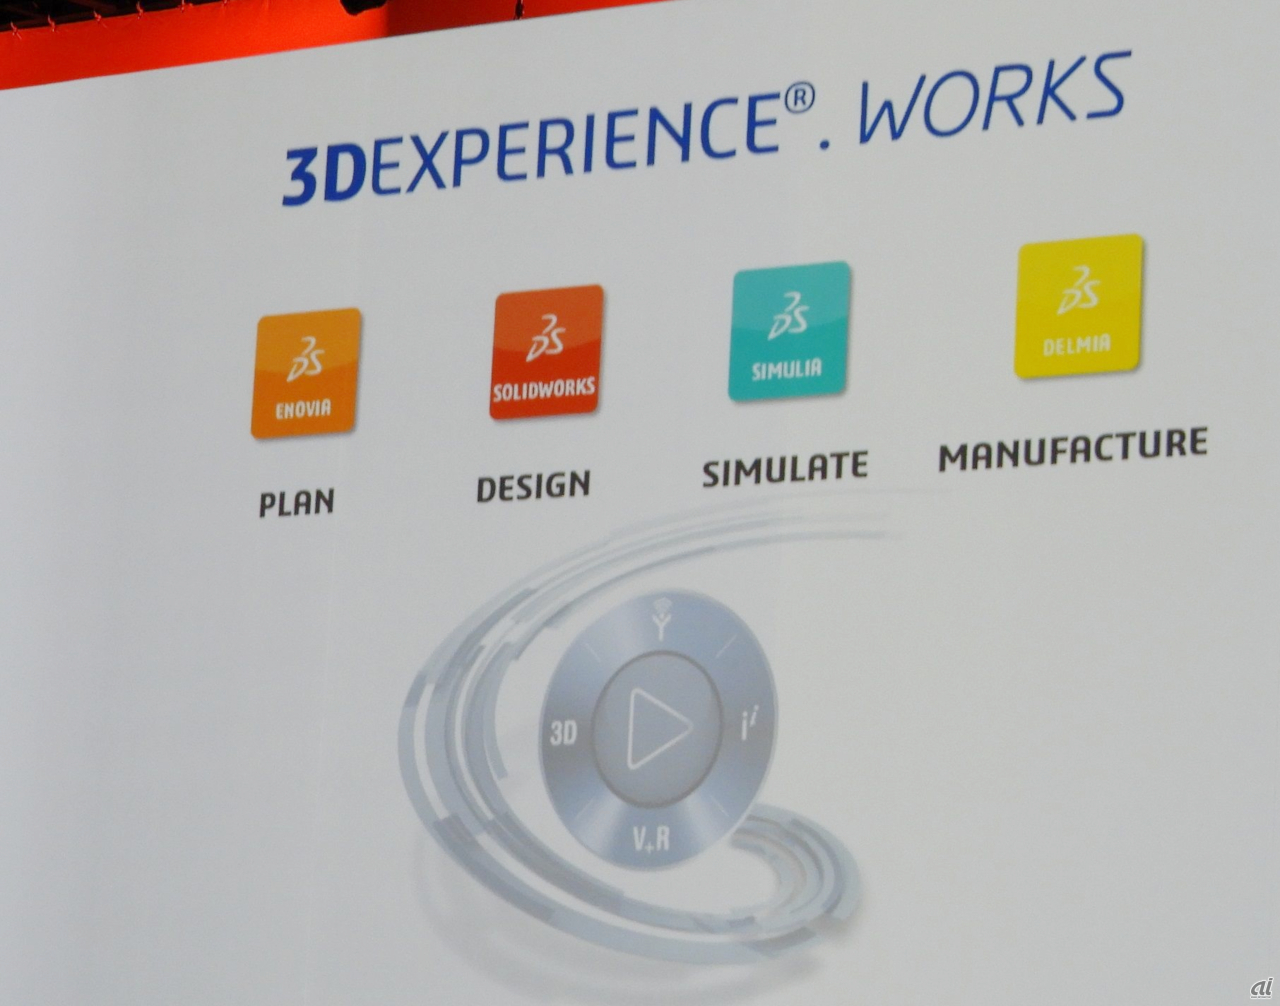 「3DEXPERIENCE.WORKS」は「計画」「デザイン」「シミュレーション」「製造ERP」を自在にコラボレーションし、製造プロセス全般の合理化を目指す